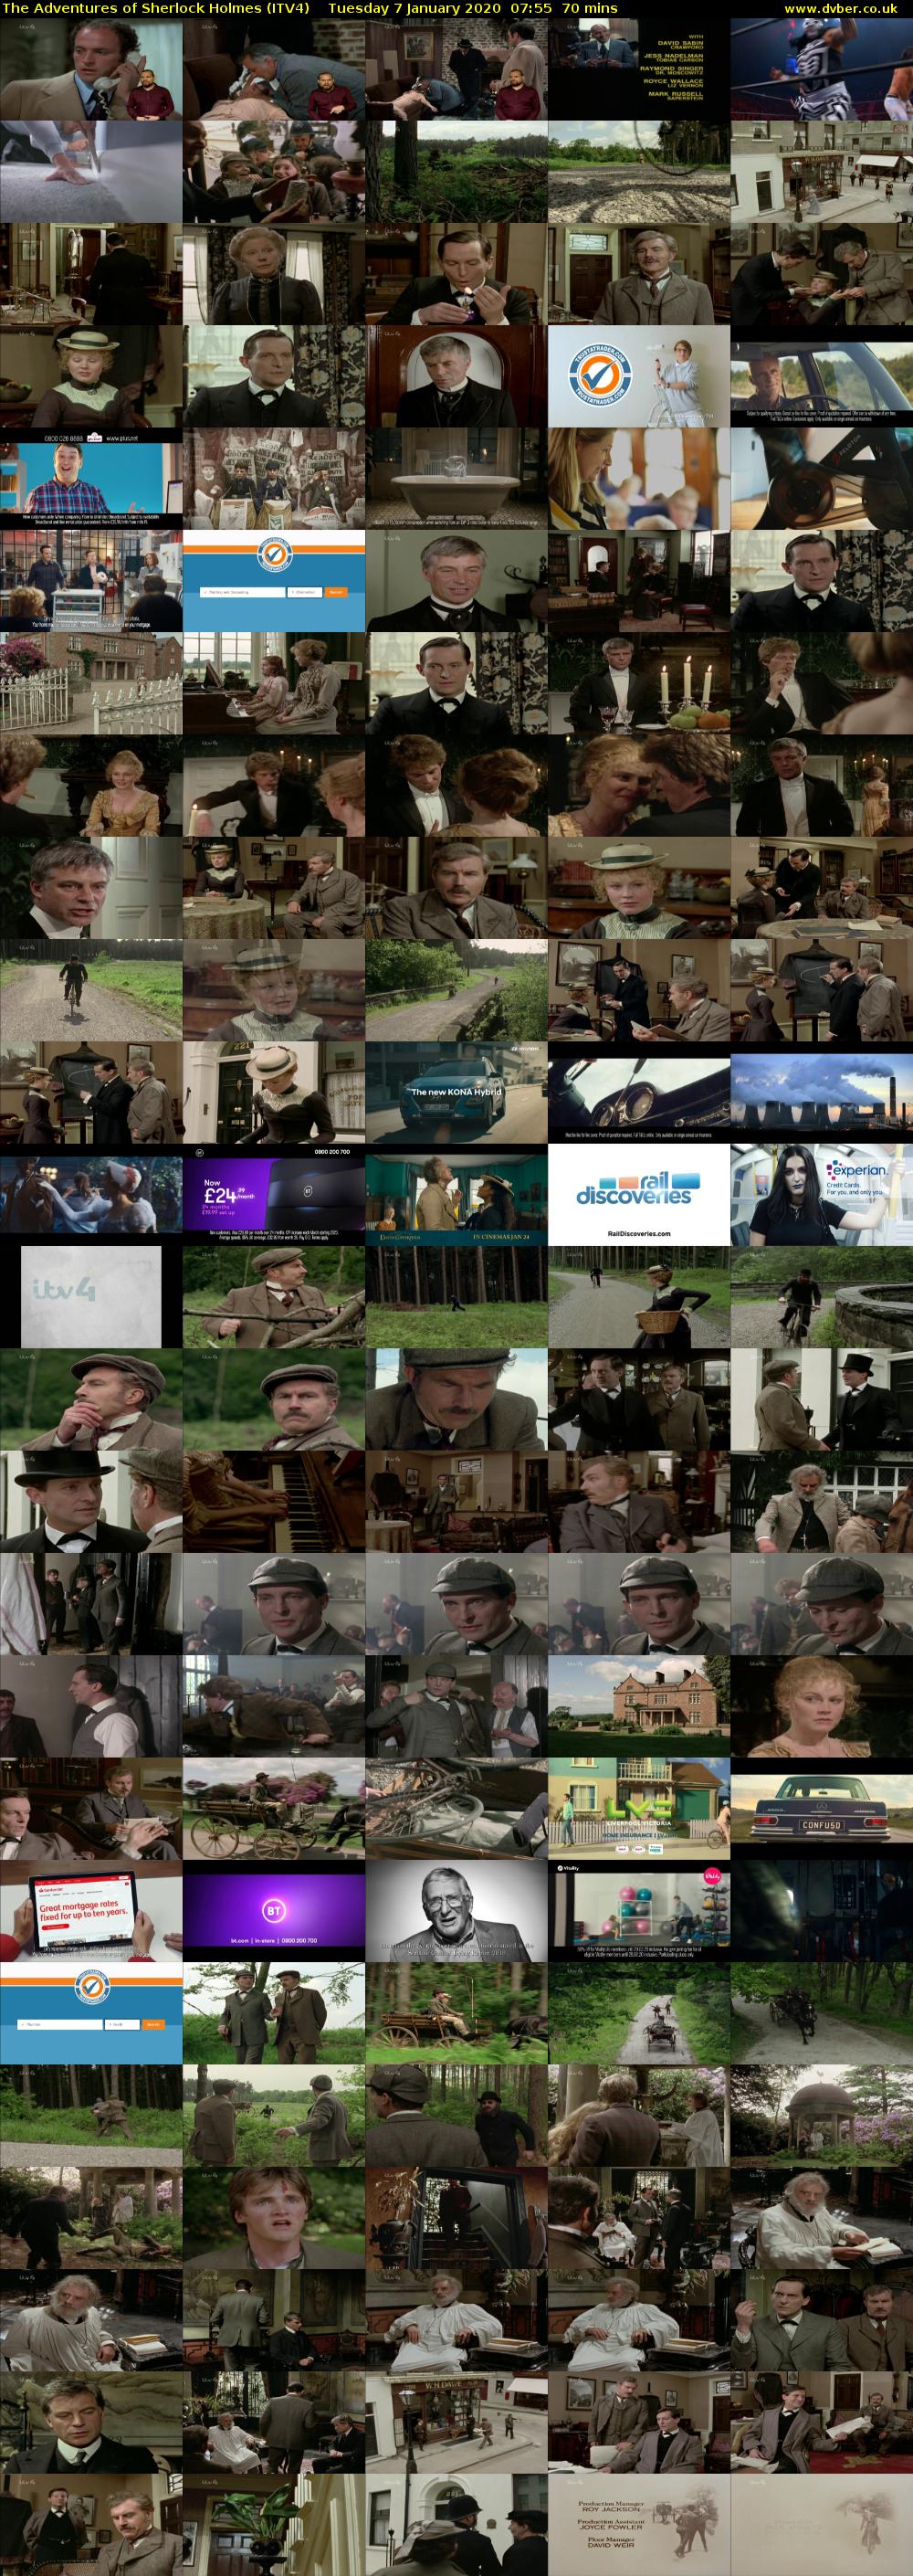 The Adventures of Sherlock Holmes (ITV4) Tuesday 7 January 2020 07:55 - 09:05